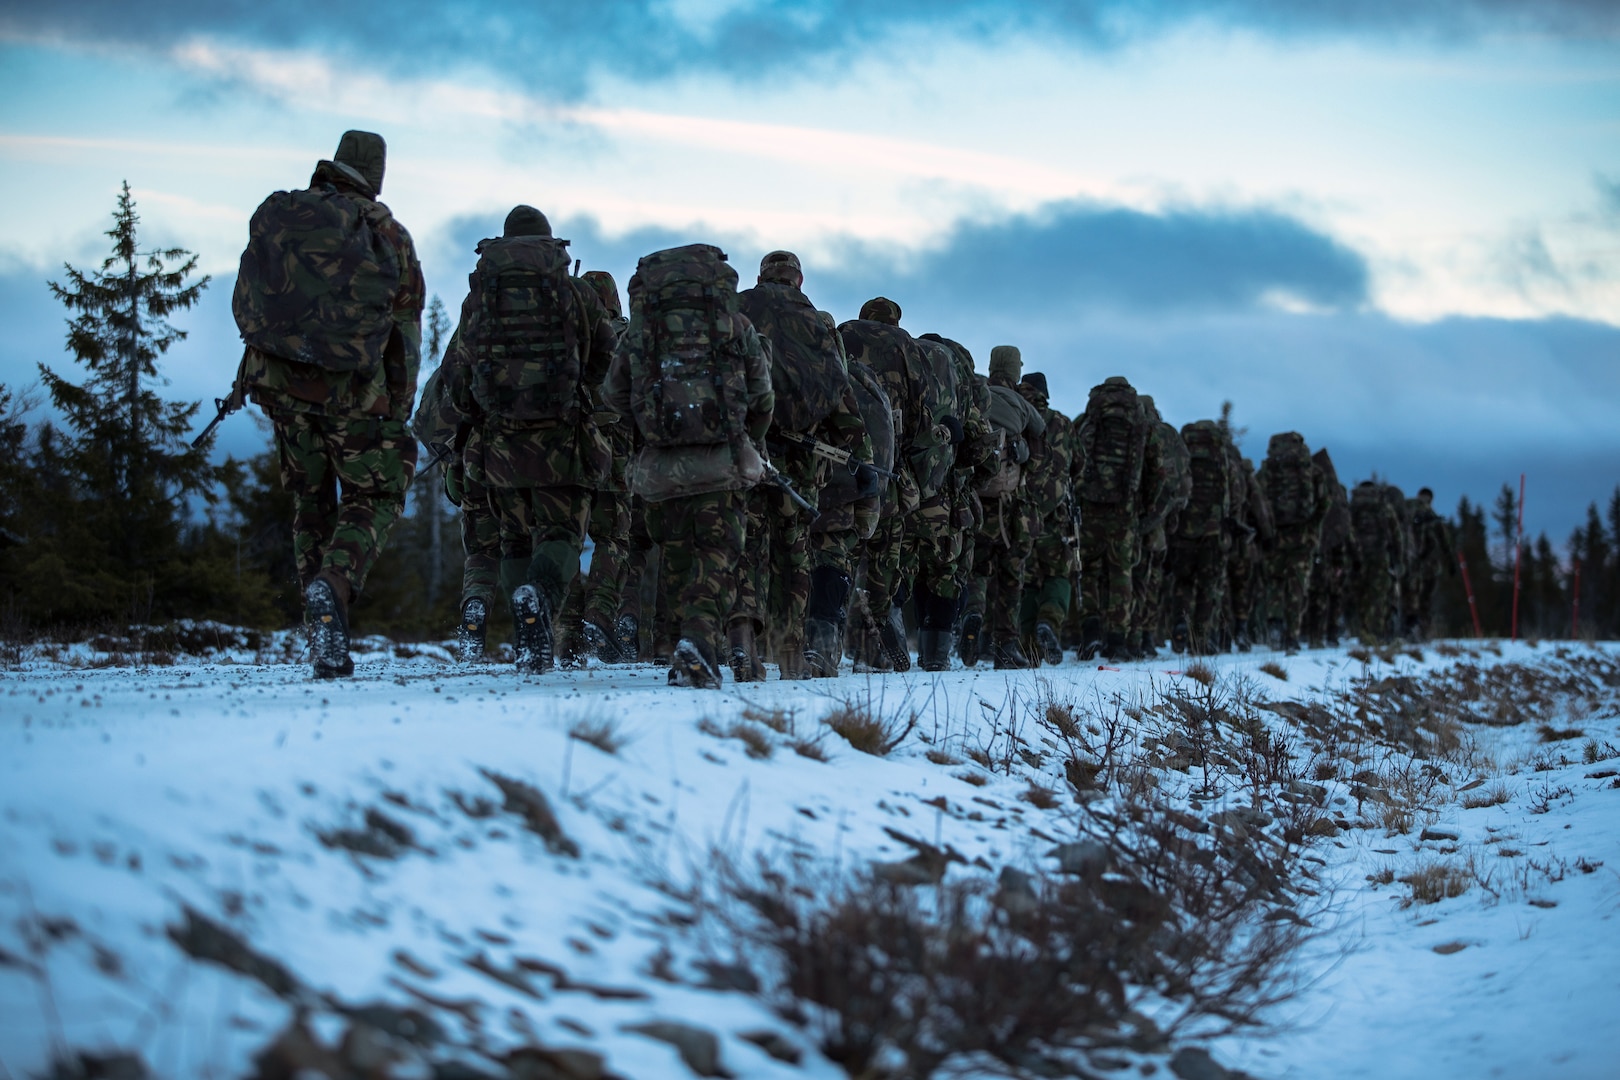 Mechanized infantry battalion 45 Painfbat, Regiment Infanterie Oranje Gelderland, Royal Netherlands army, during cold weather training as part of
NATO’s exercise Trident Juncture 2018, Norway, October 2018 (Courtesy NATO/The Netherlands/Hille Hillinga)